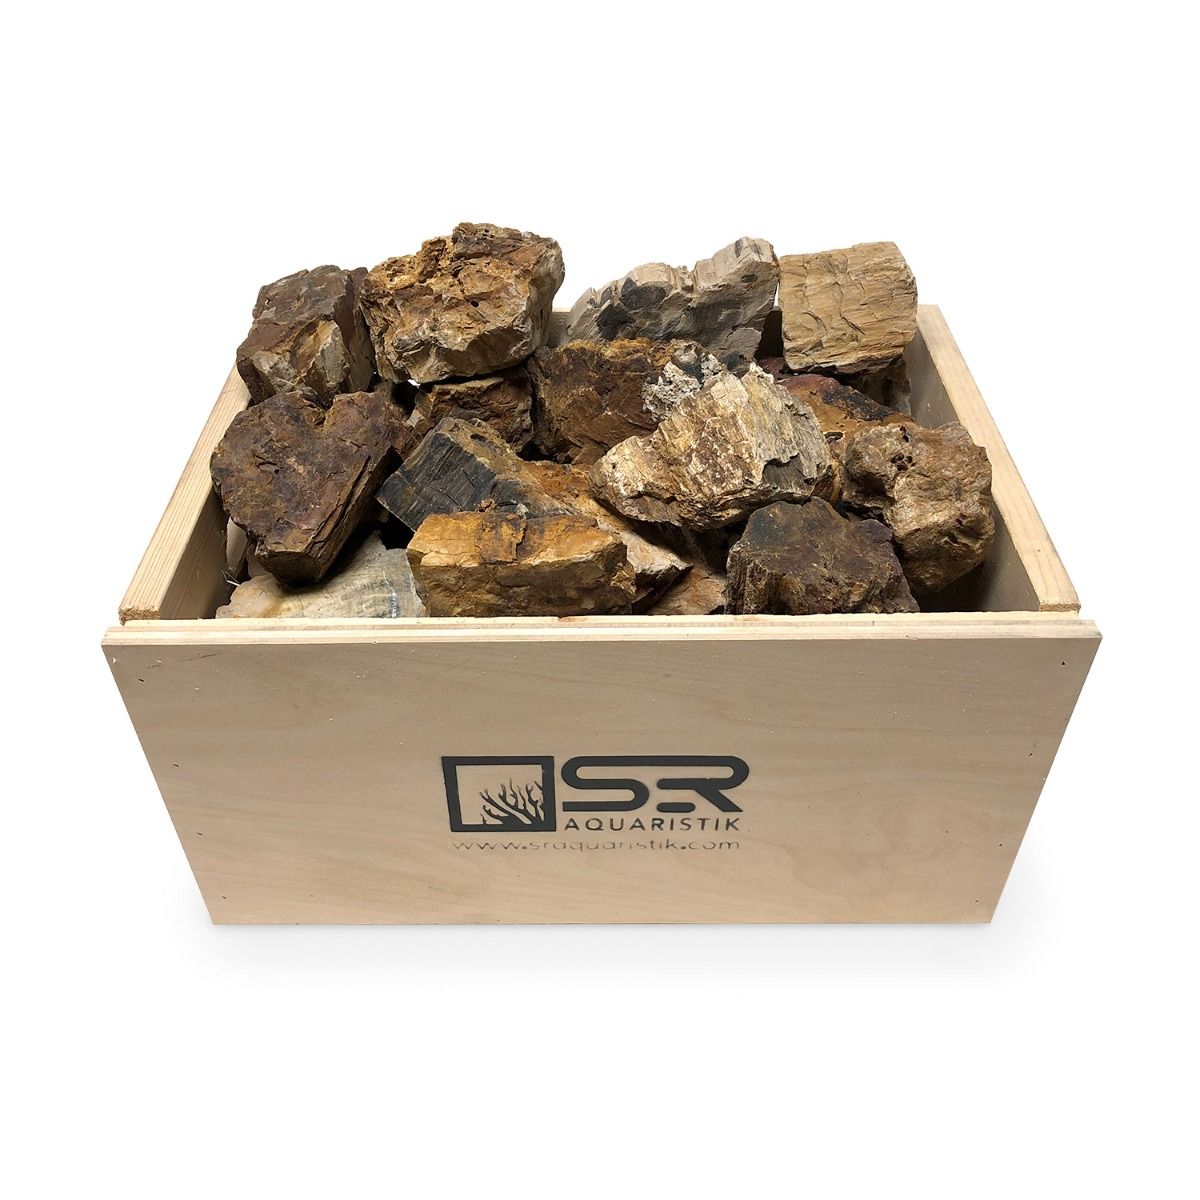 SR Aquaristik Petrified Wood per pound